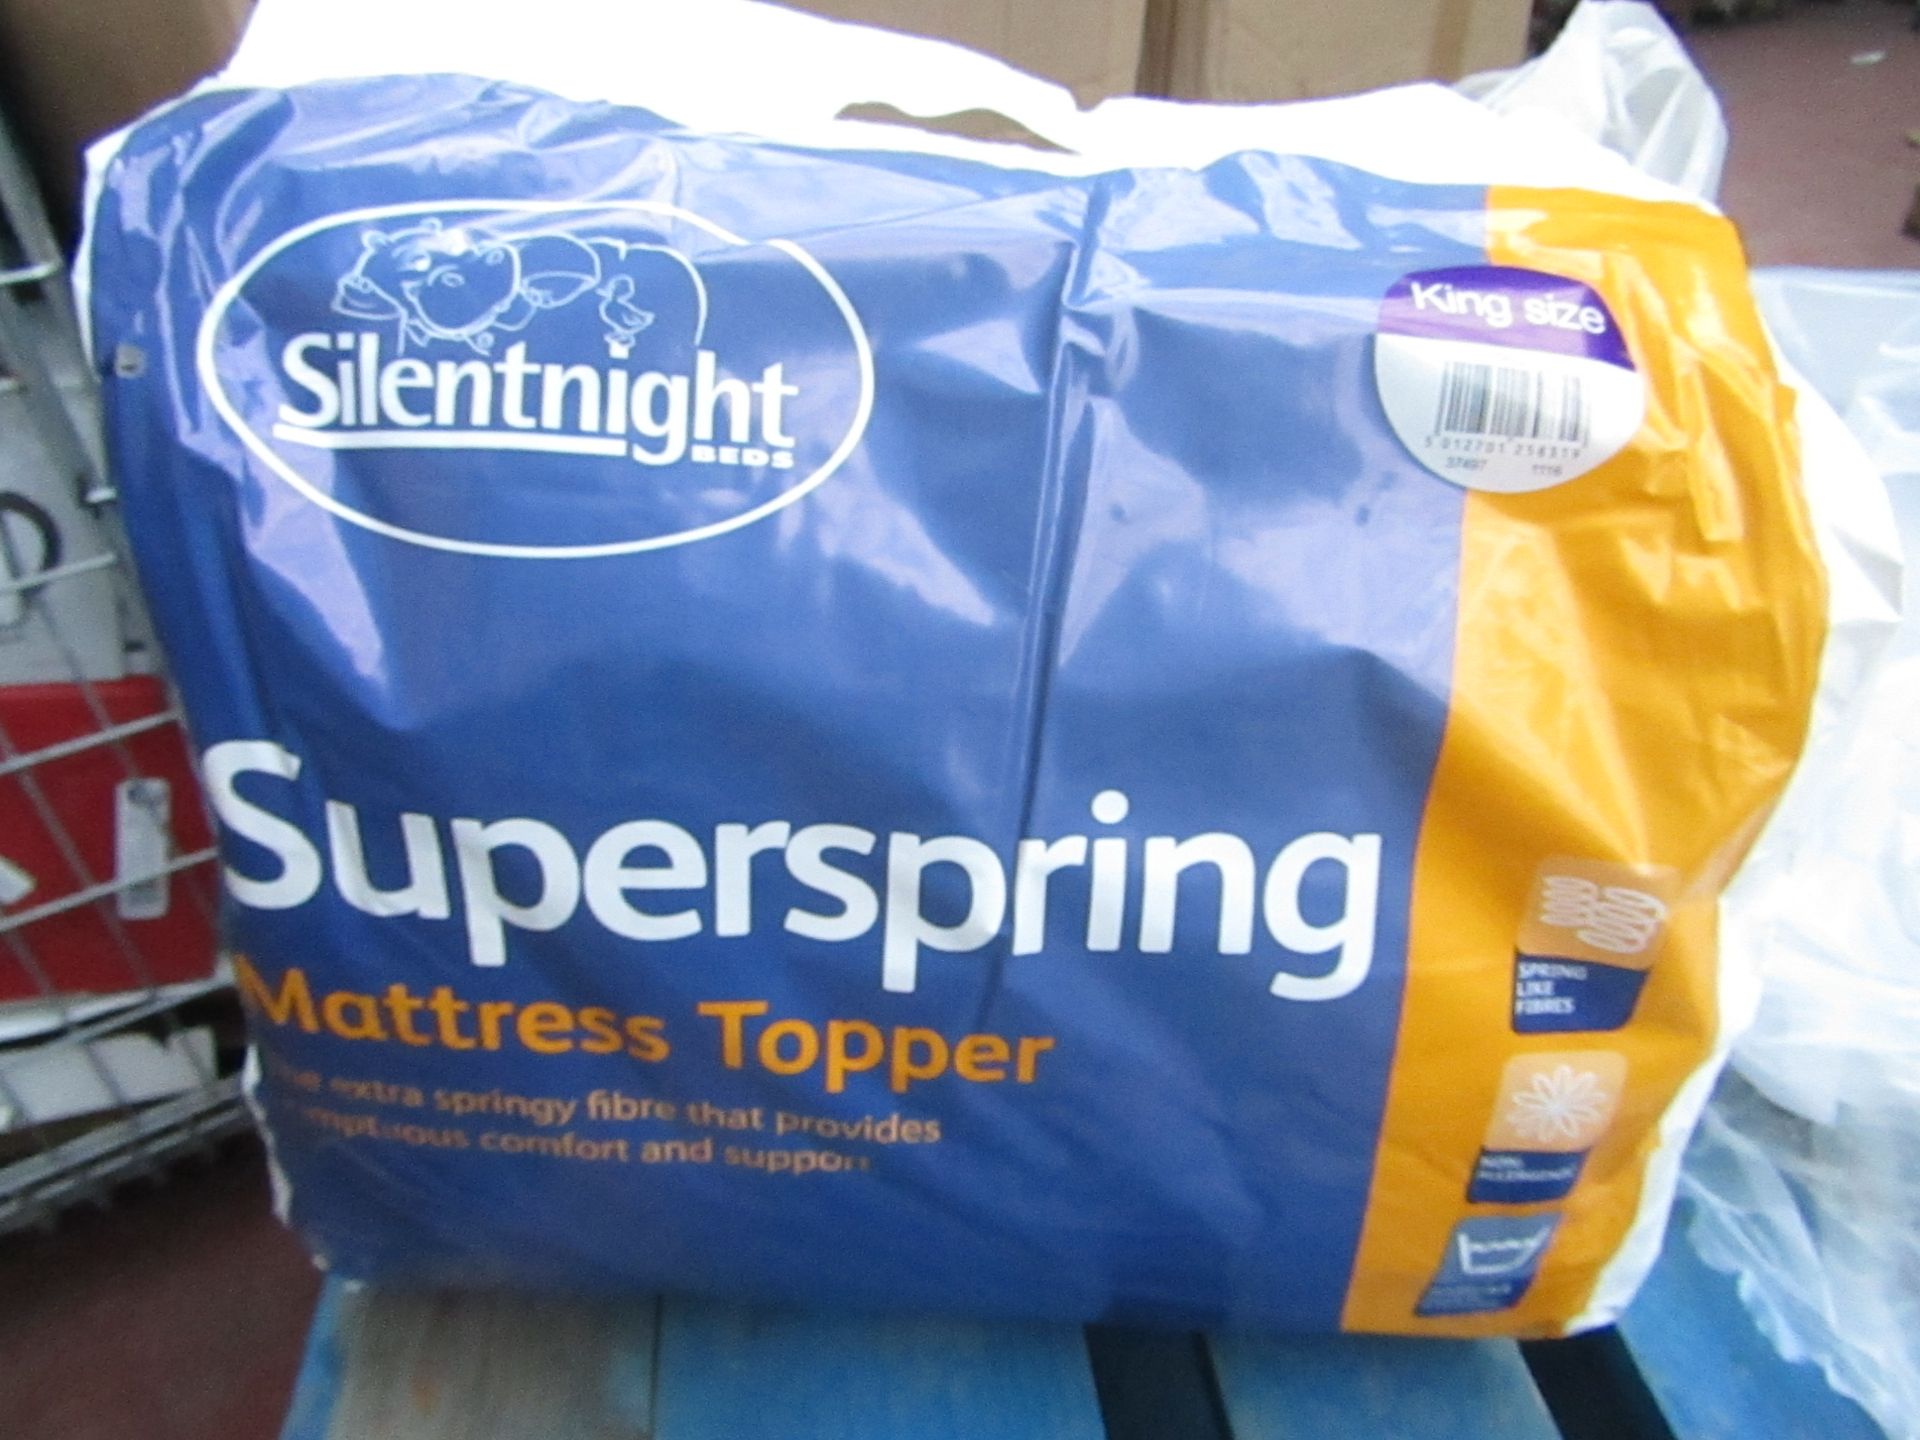 4x Silentnight Super Spring mattress topper, kingsize, all brand new and packaged. Each RRP £29.99